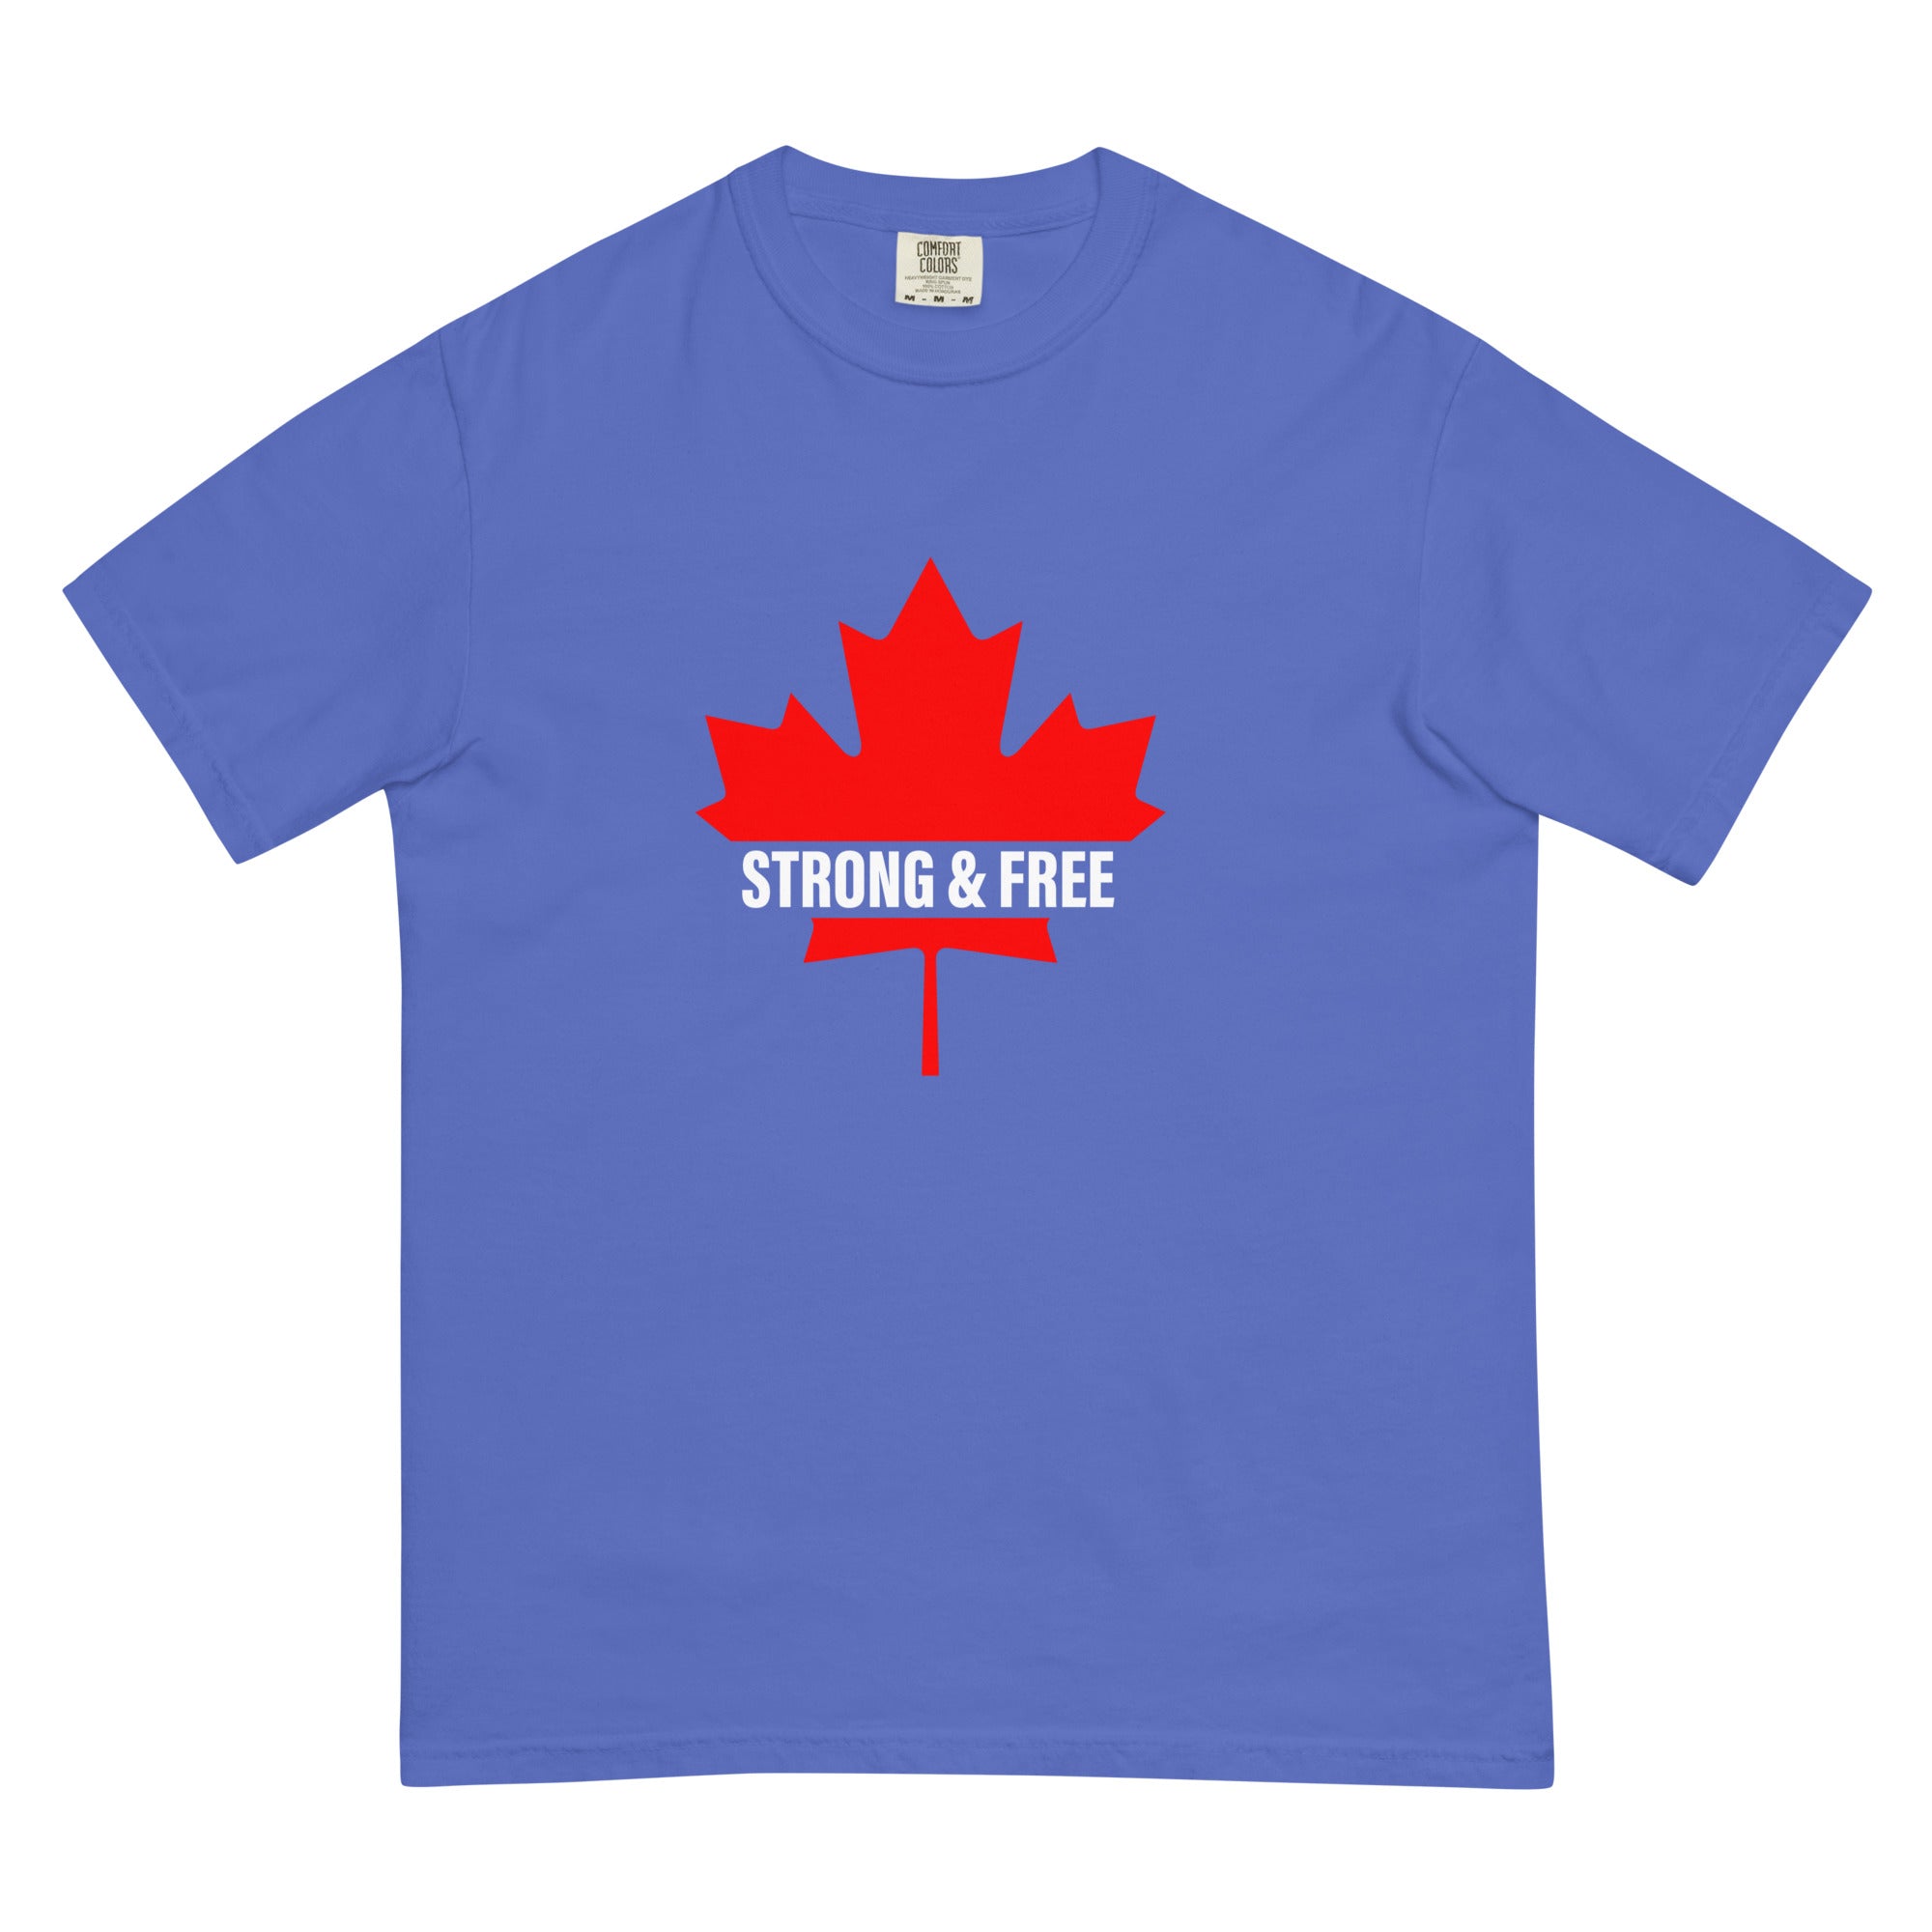 Men's "Strong & Free" T-shirt